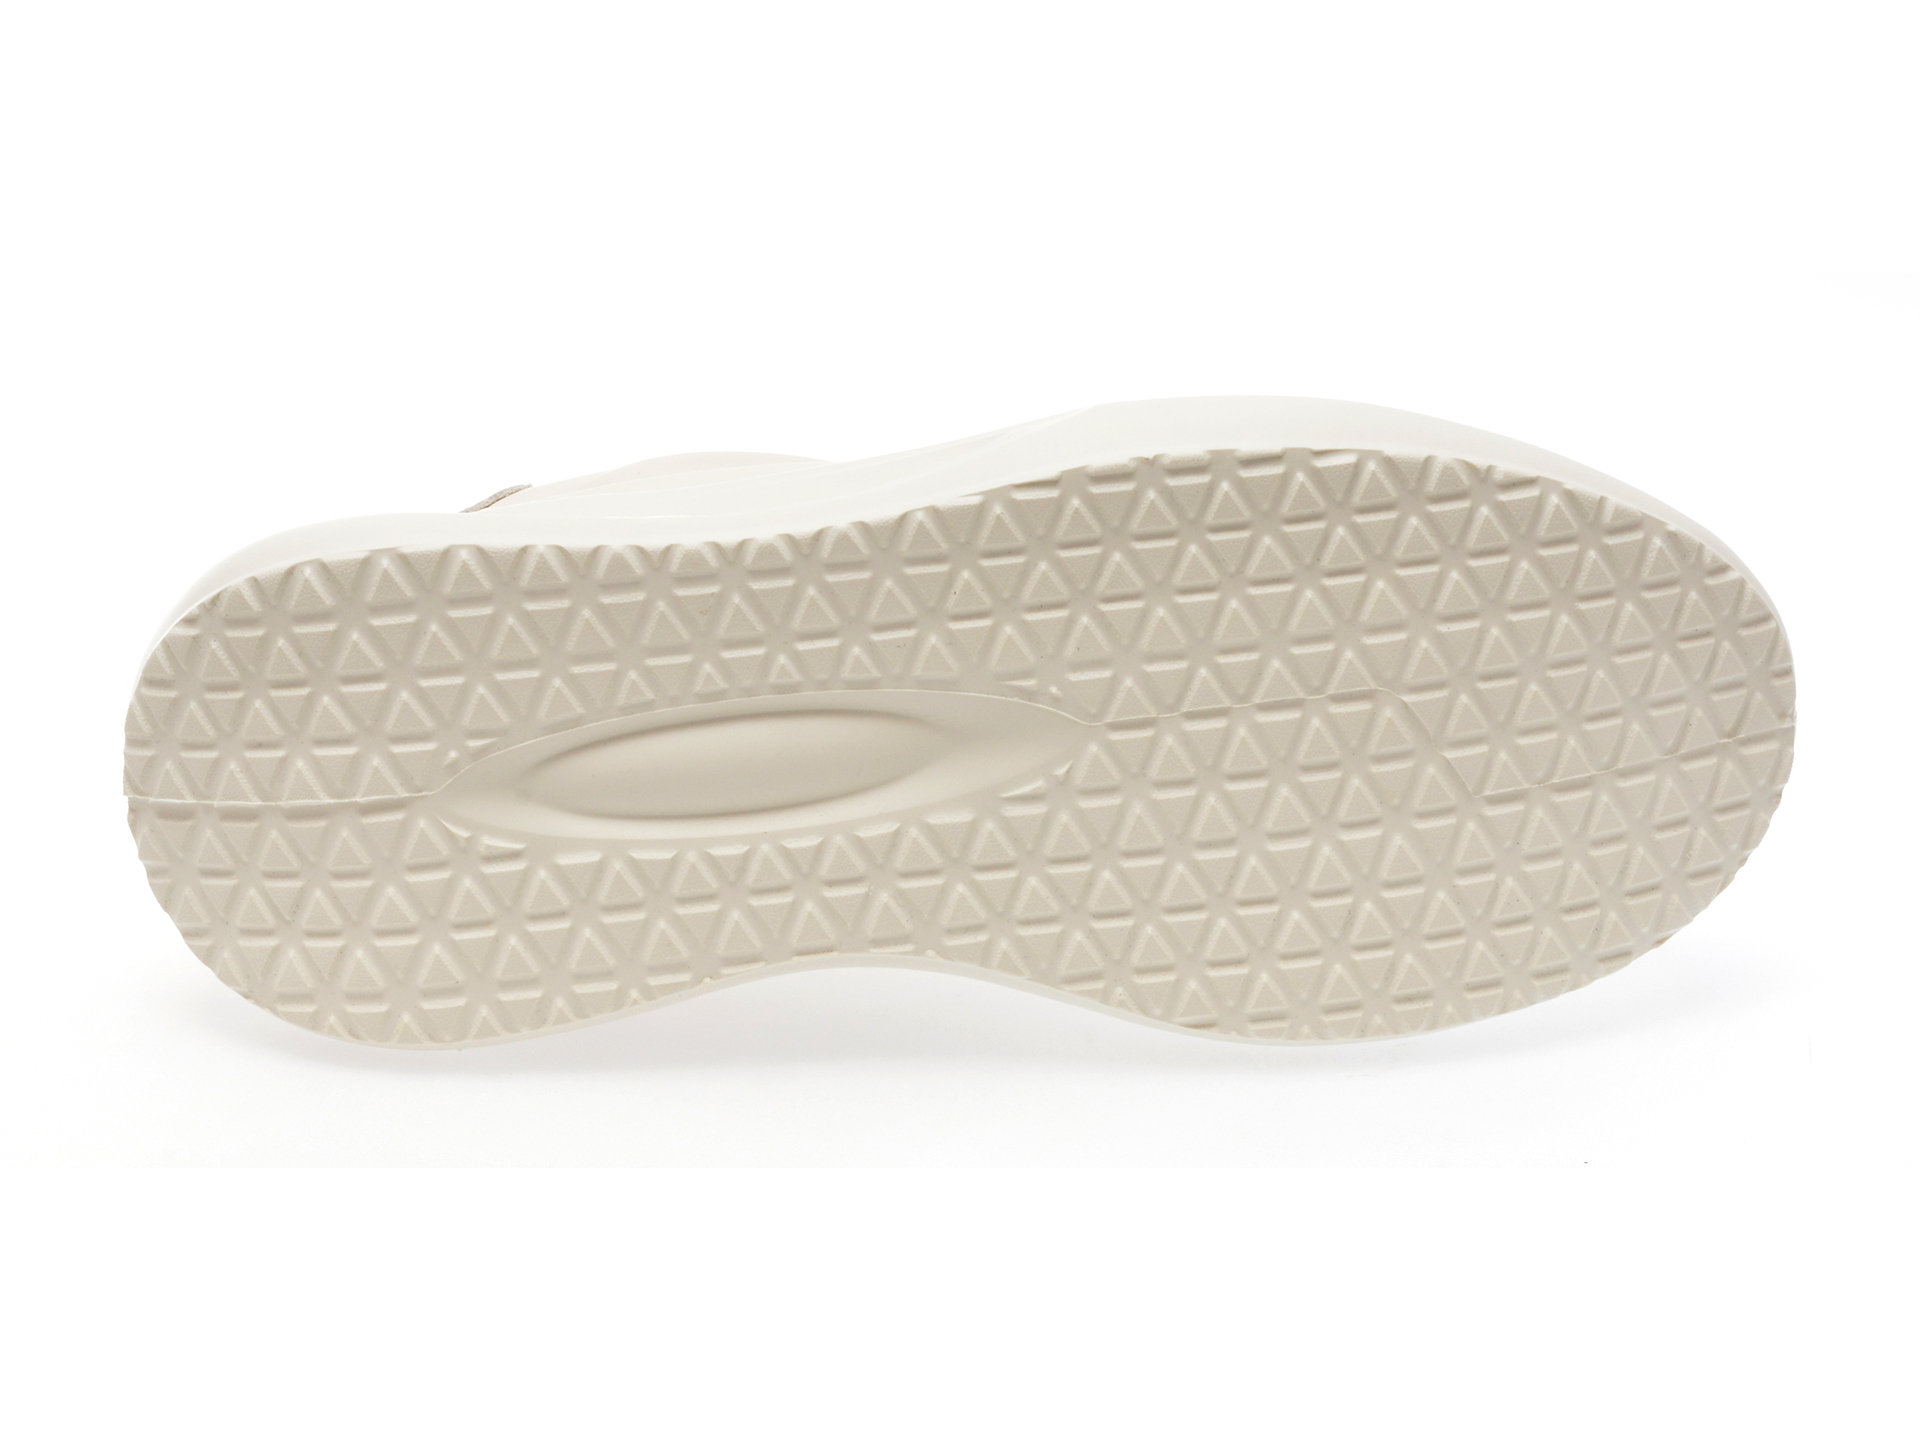 Pantofi casual GRYXX albi, 8822, din piele naturala